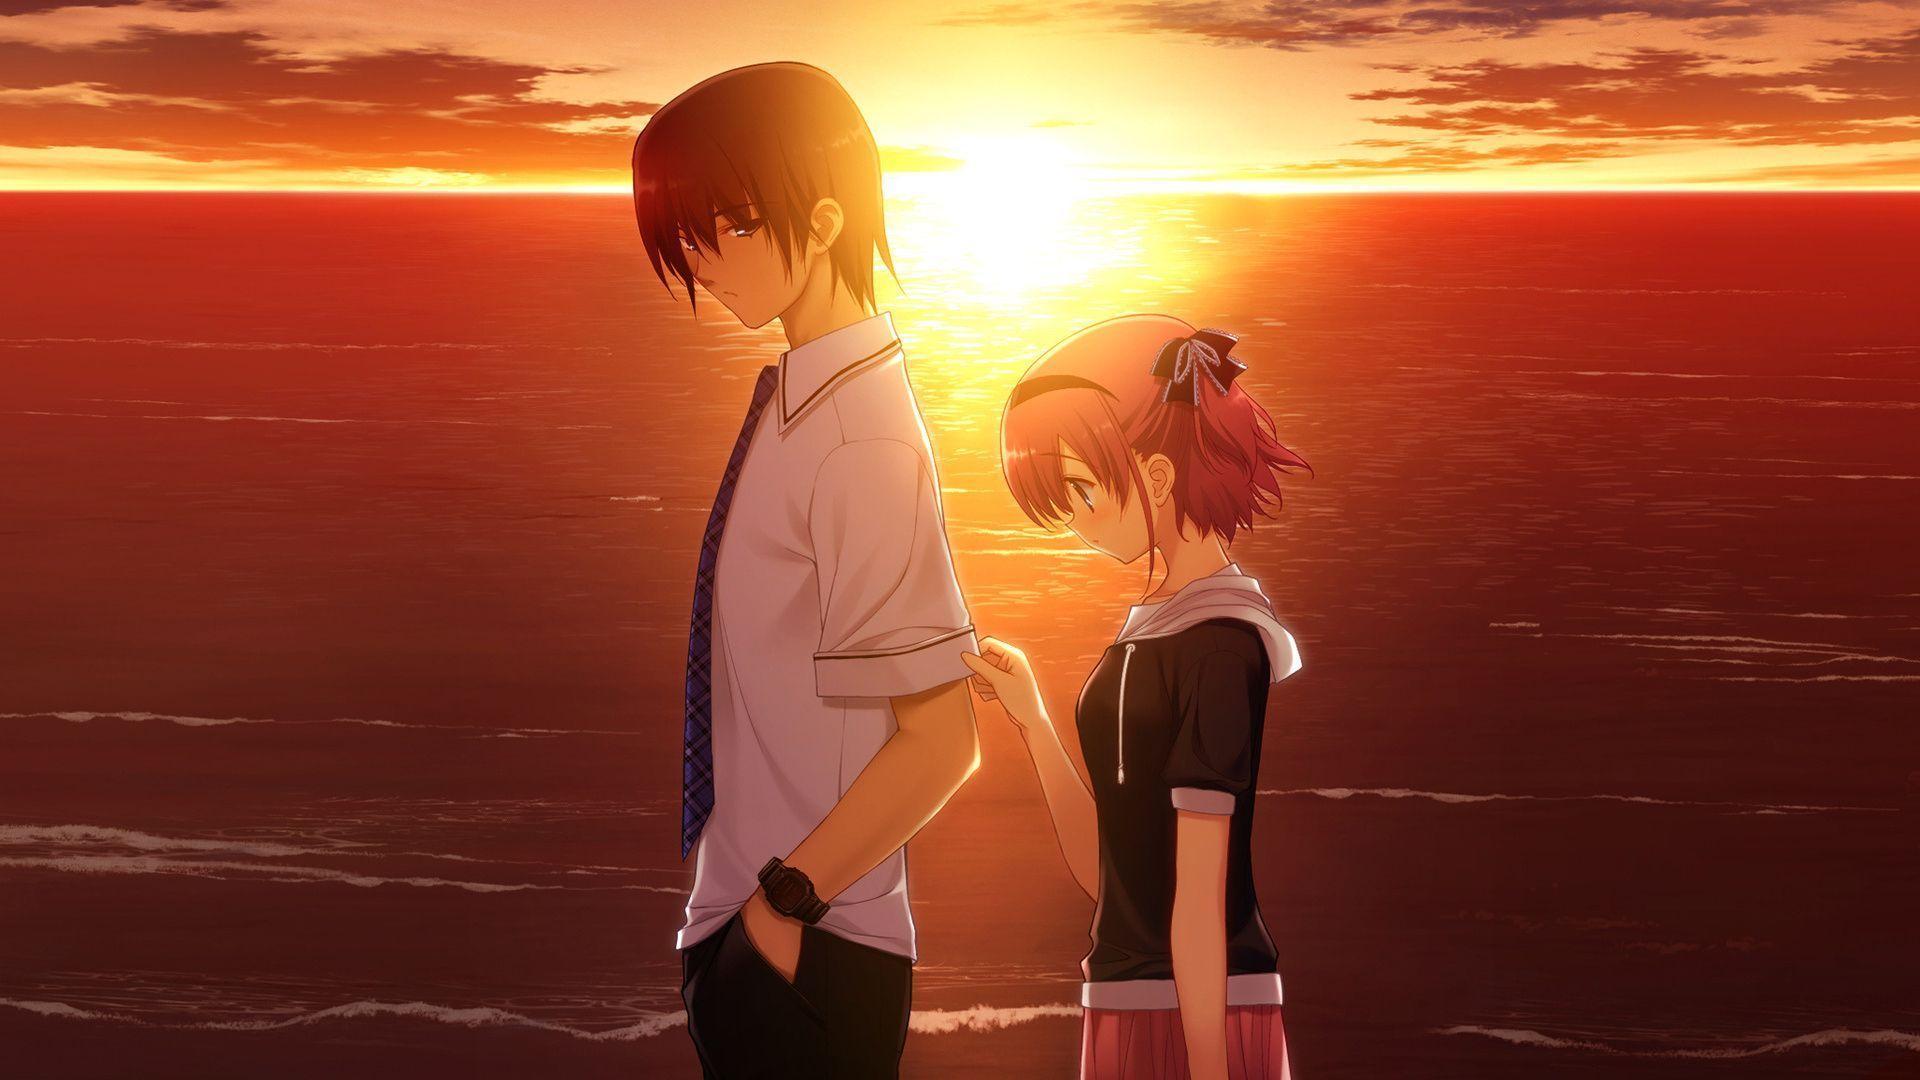 anime love sunset wallpaper. walljpeg